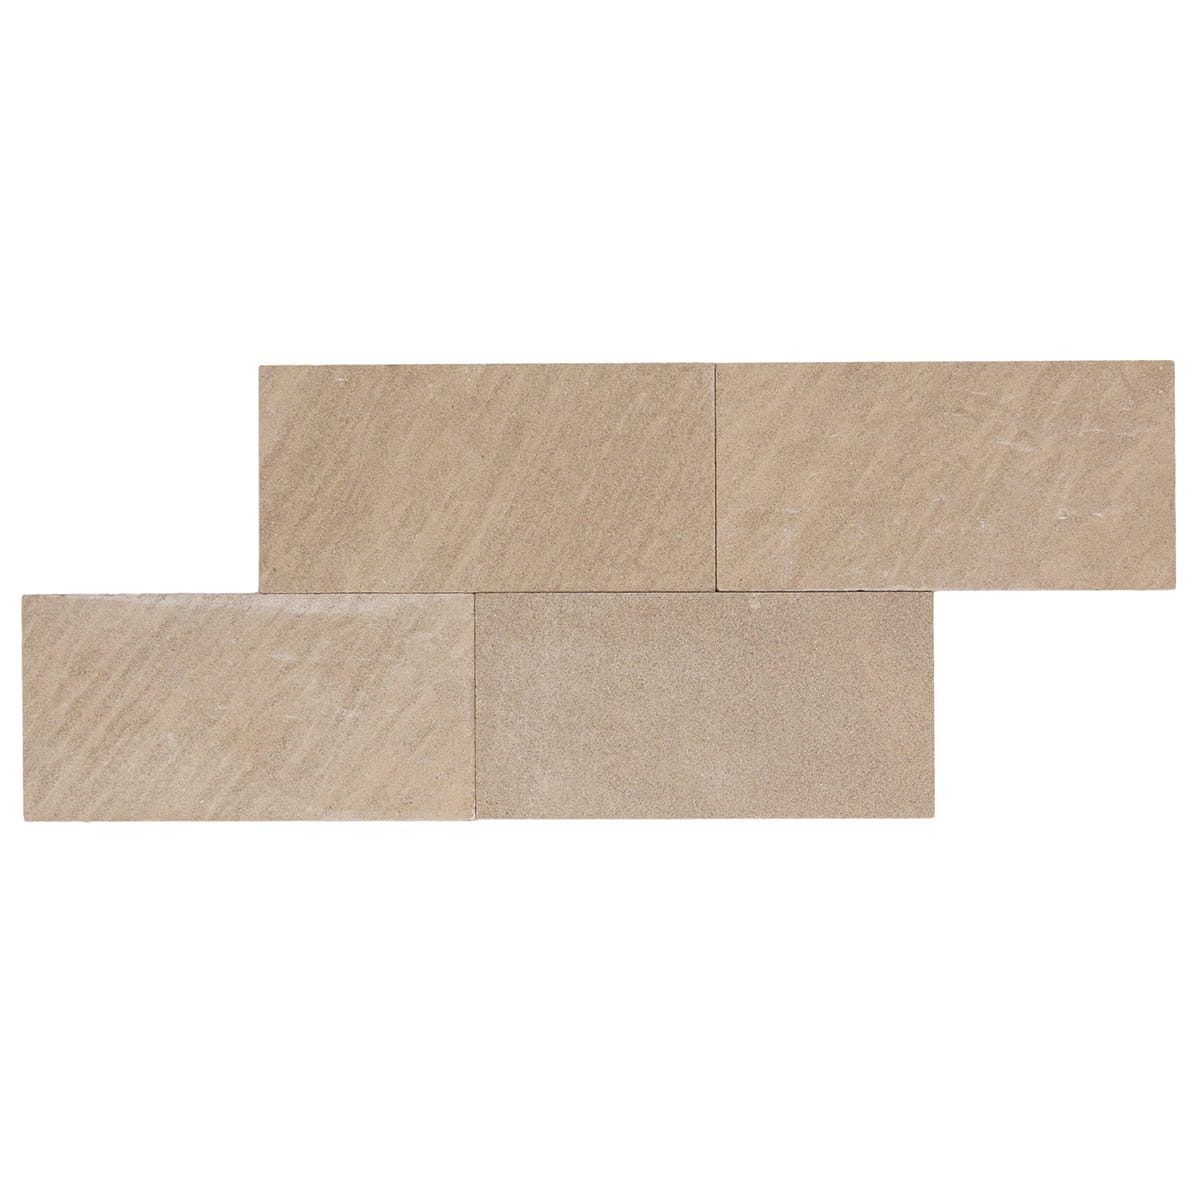 haussmann albi limestone rectangle natural stone field tile 3x6 honed